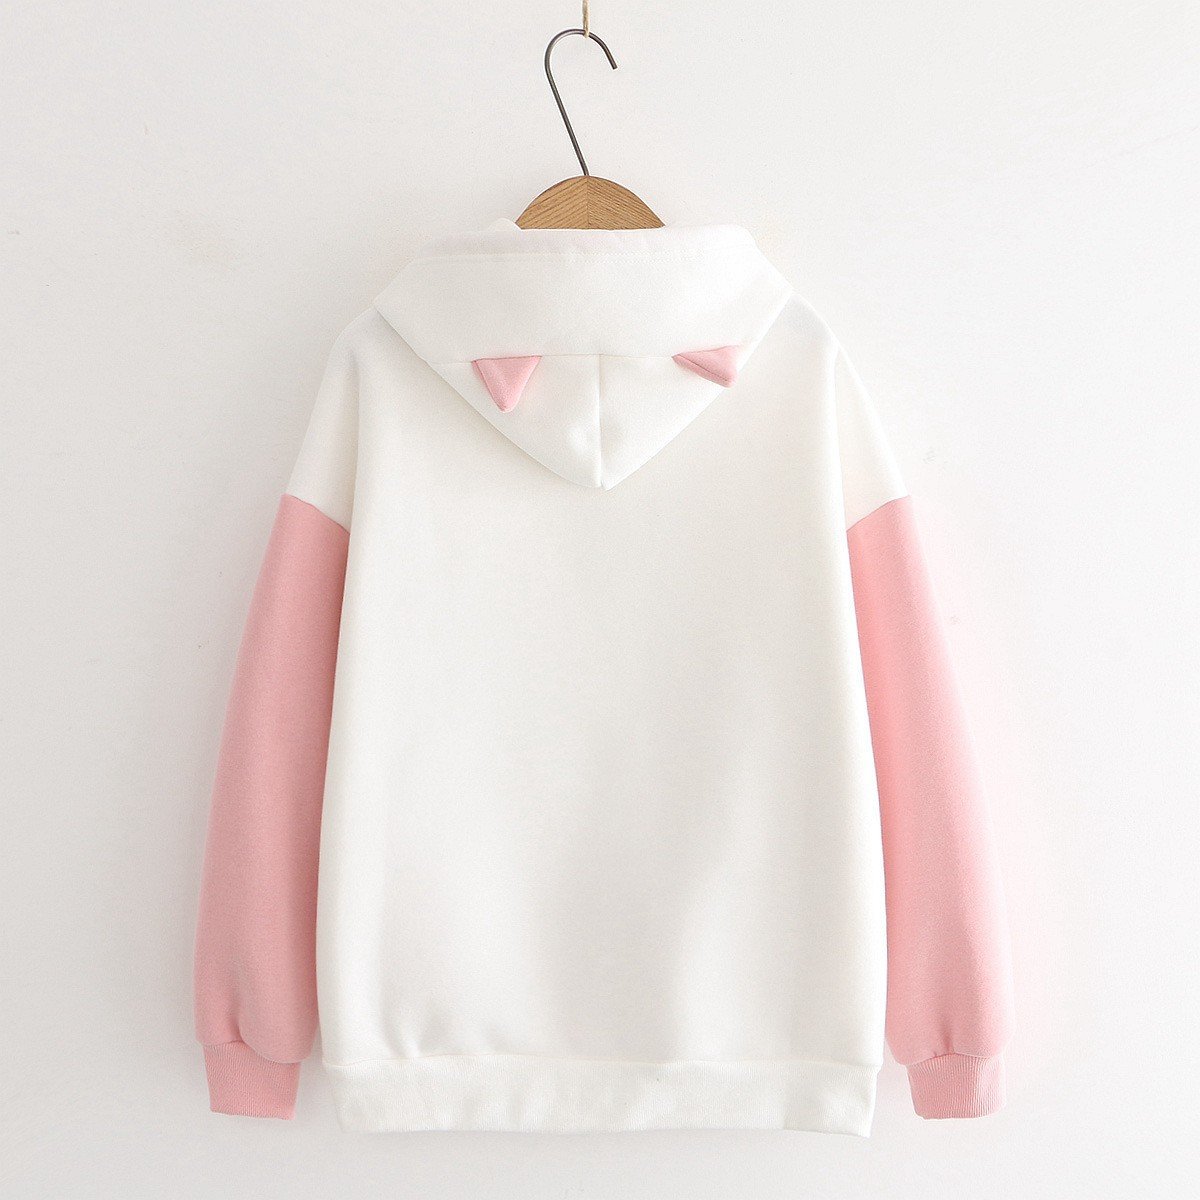 Harajuku Kawaii Cat Print Autumn Sweatshirt Cute Hoodie MK16378